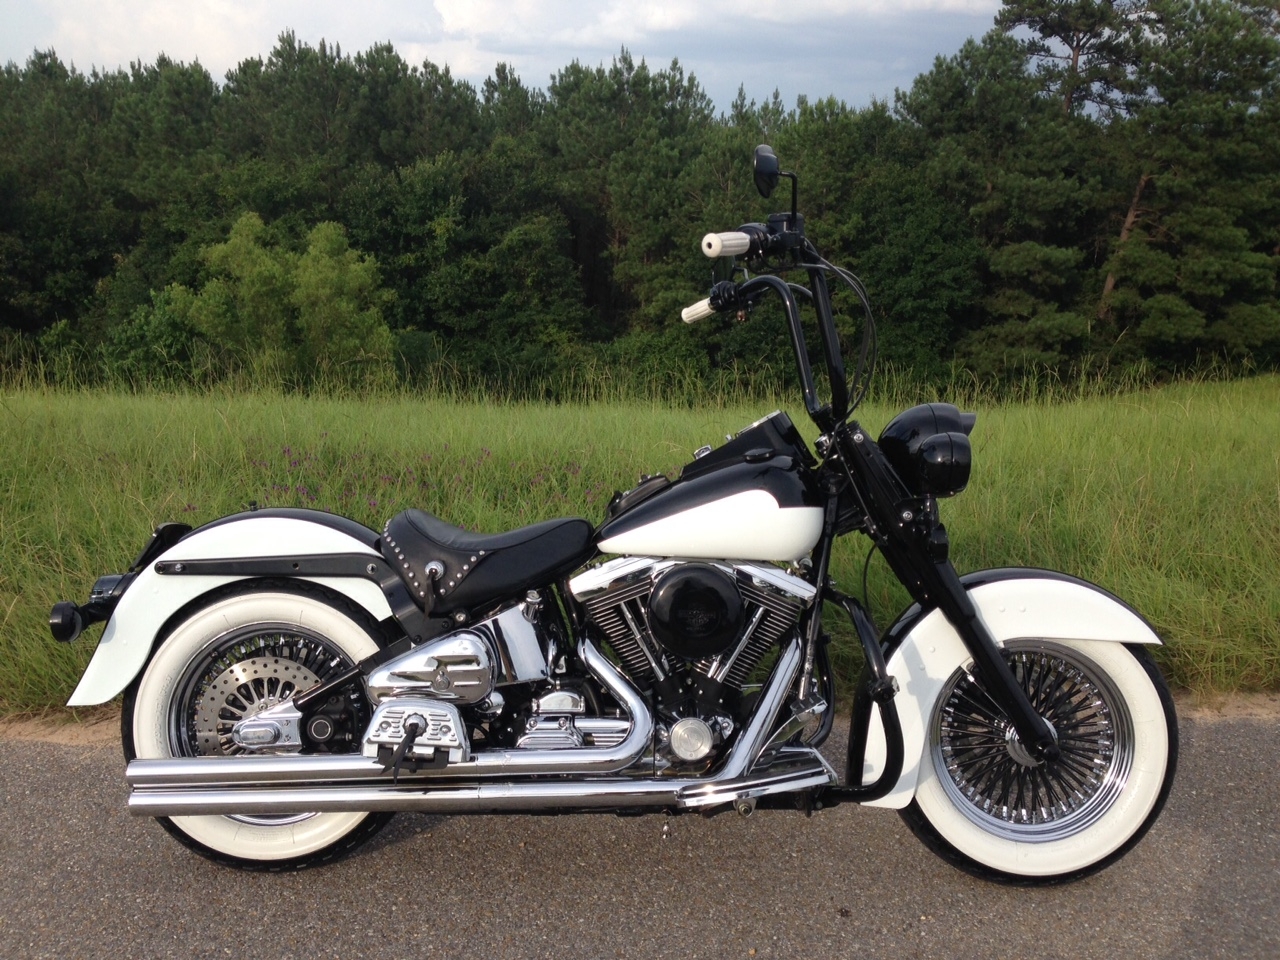 Harley Davidson Heritage Softail Custom Best Motorcycle 2020